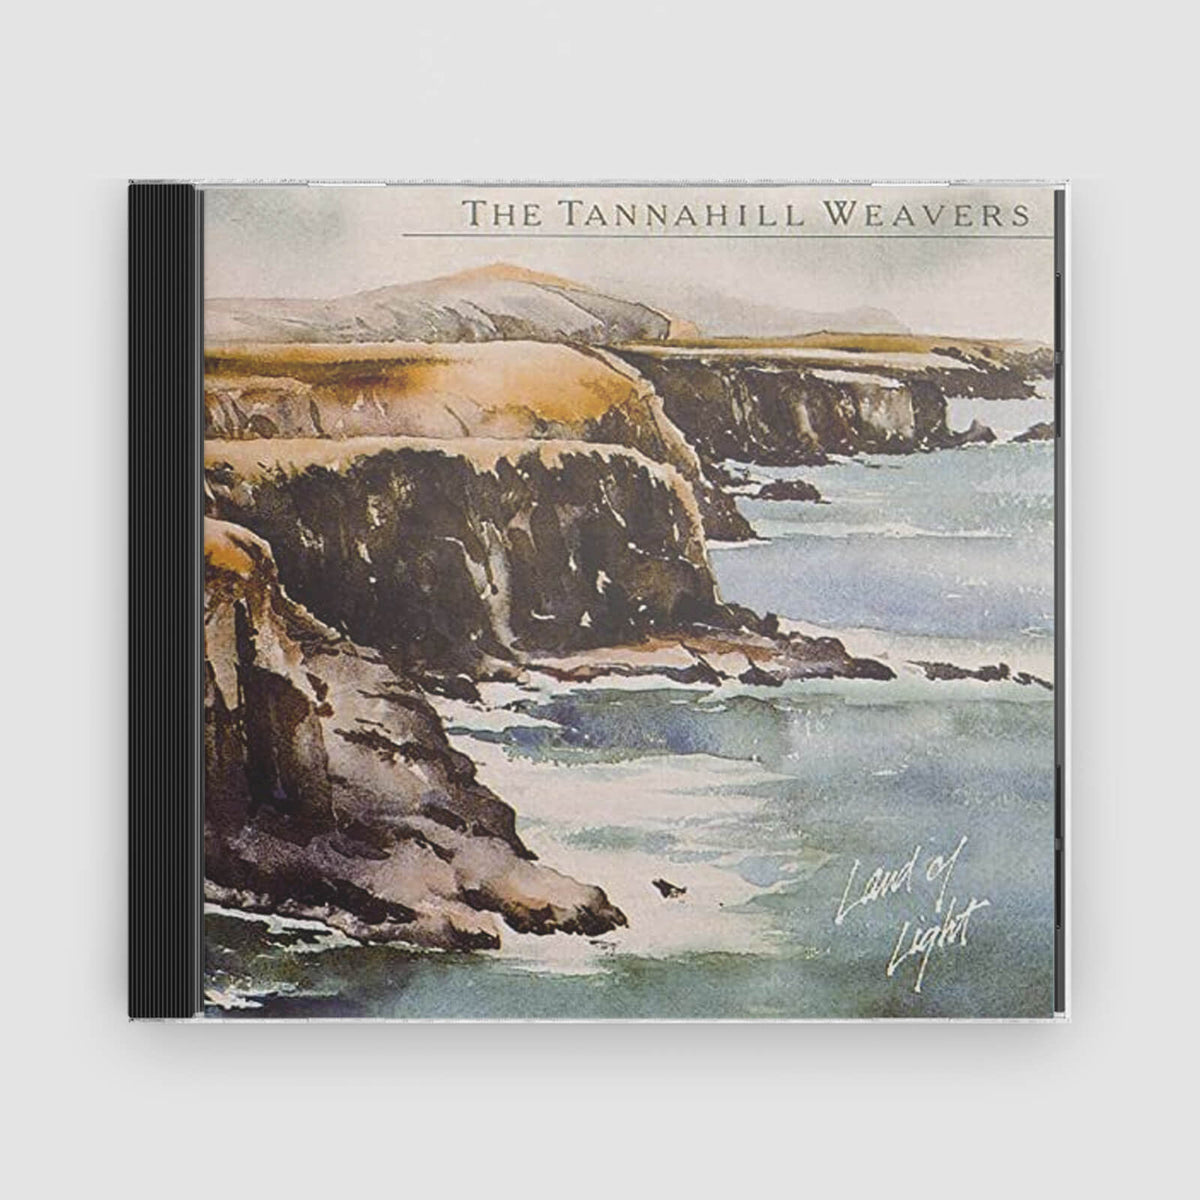 TANNAHILL WEAVERS : LAND OF LIGHT